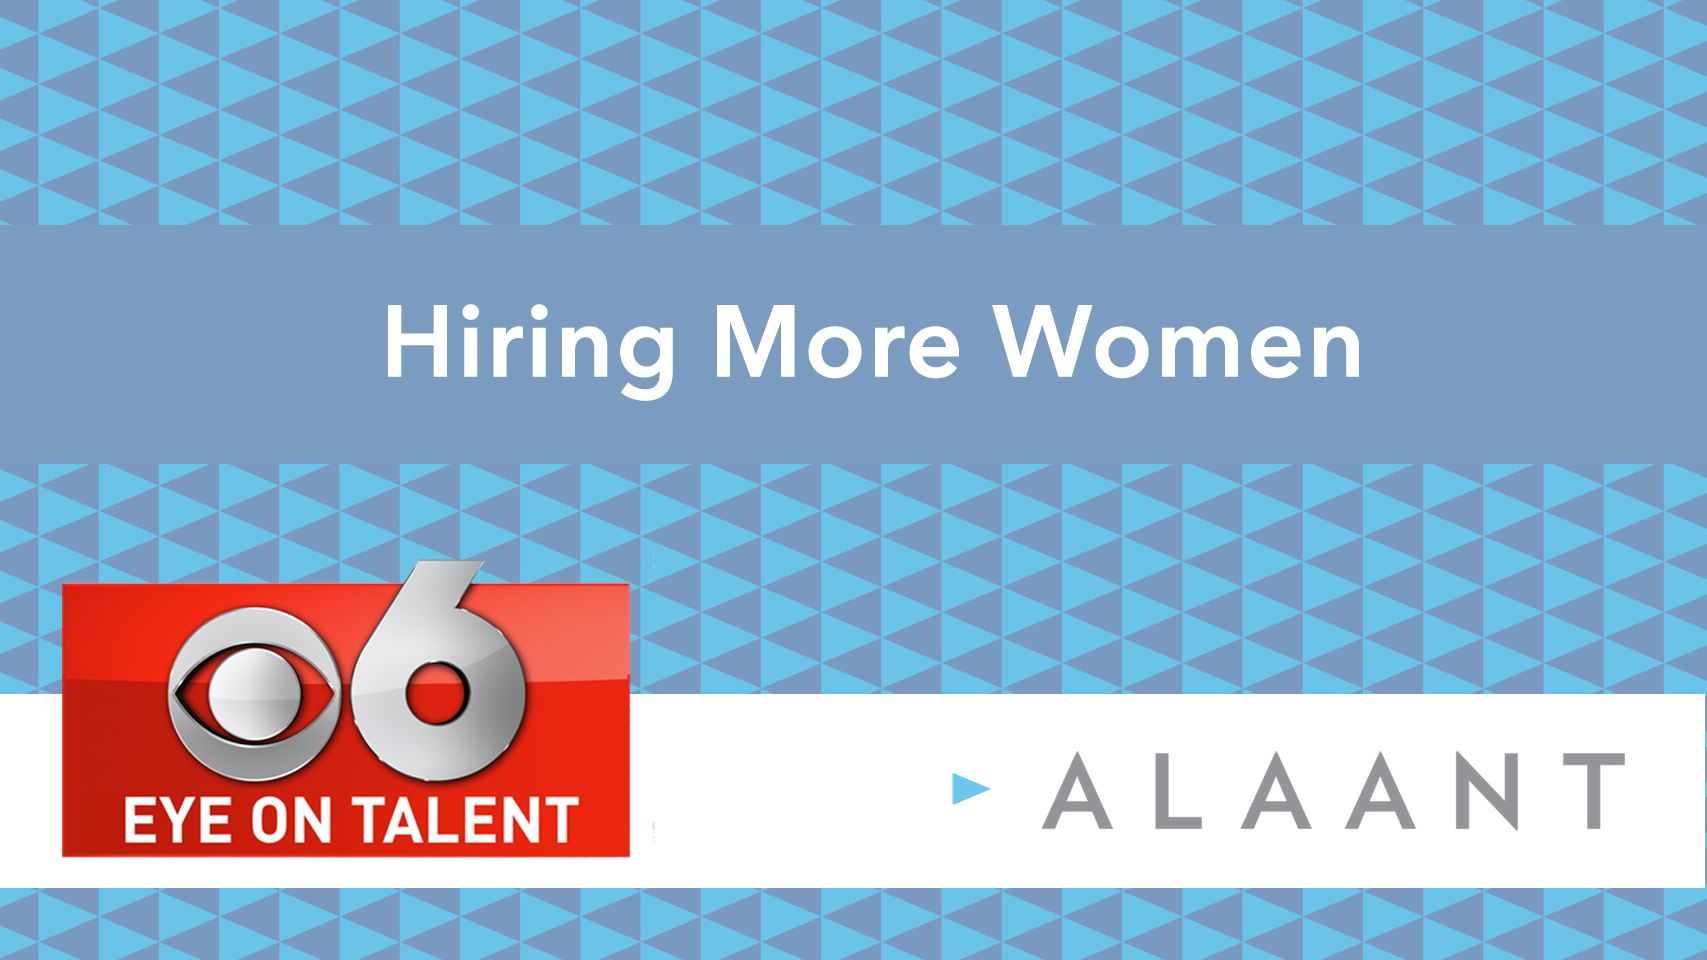 Alaant Eye on Talent Hiring More Women